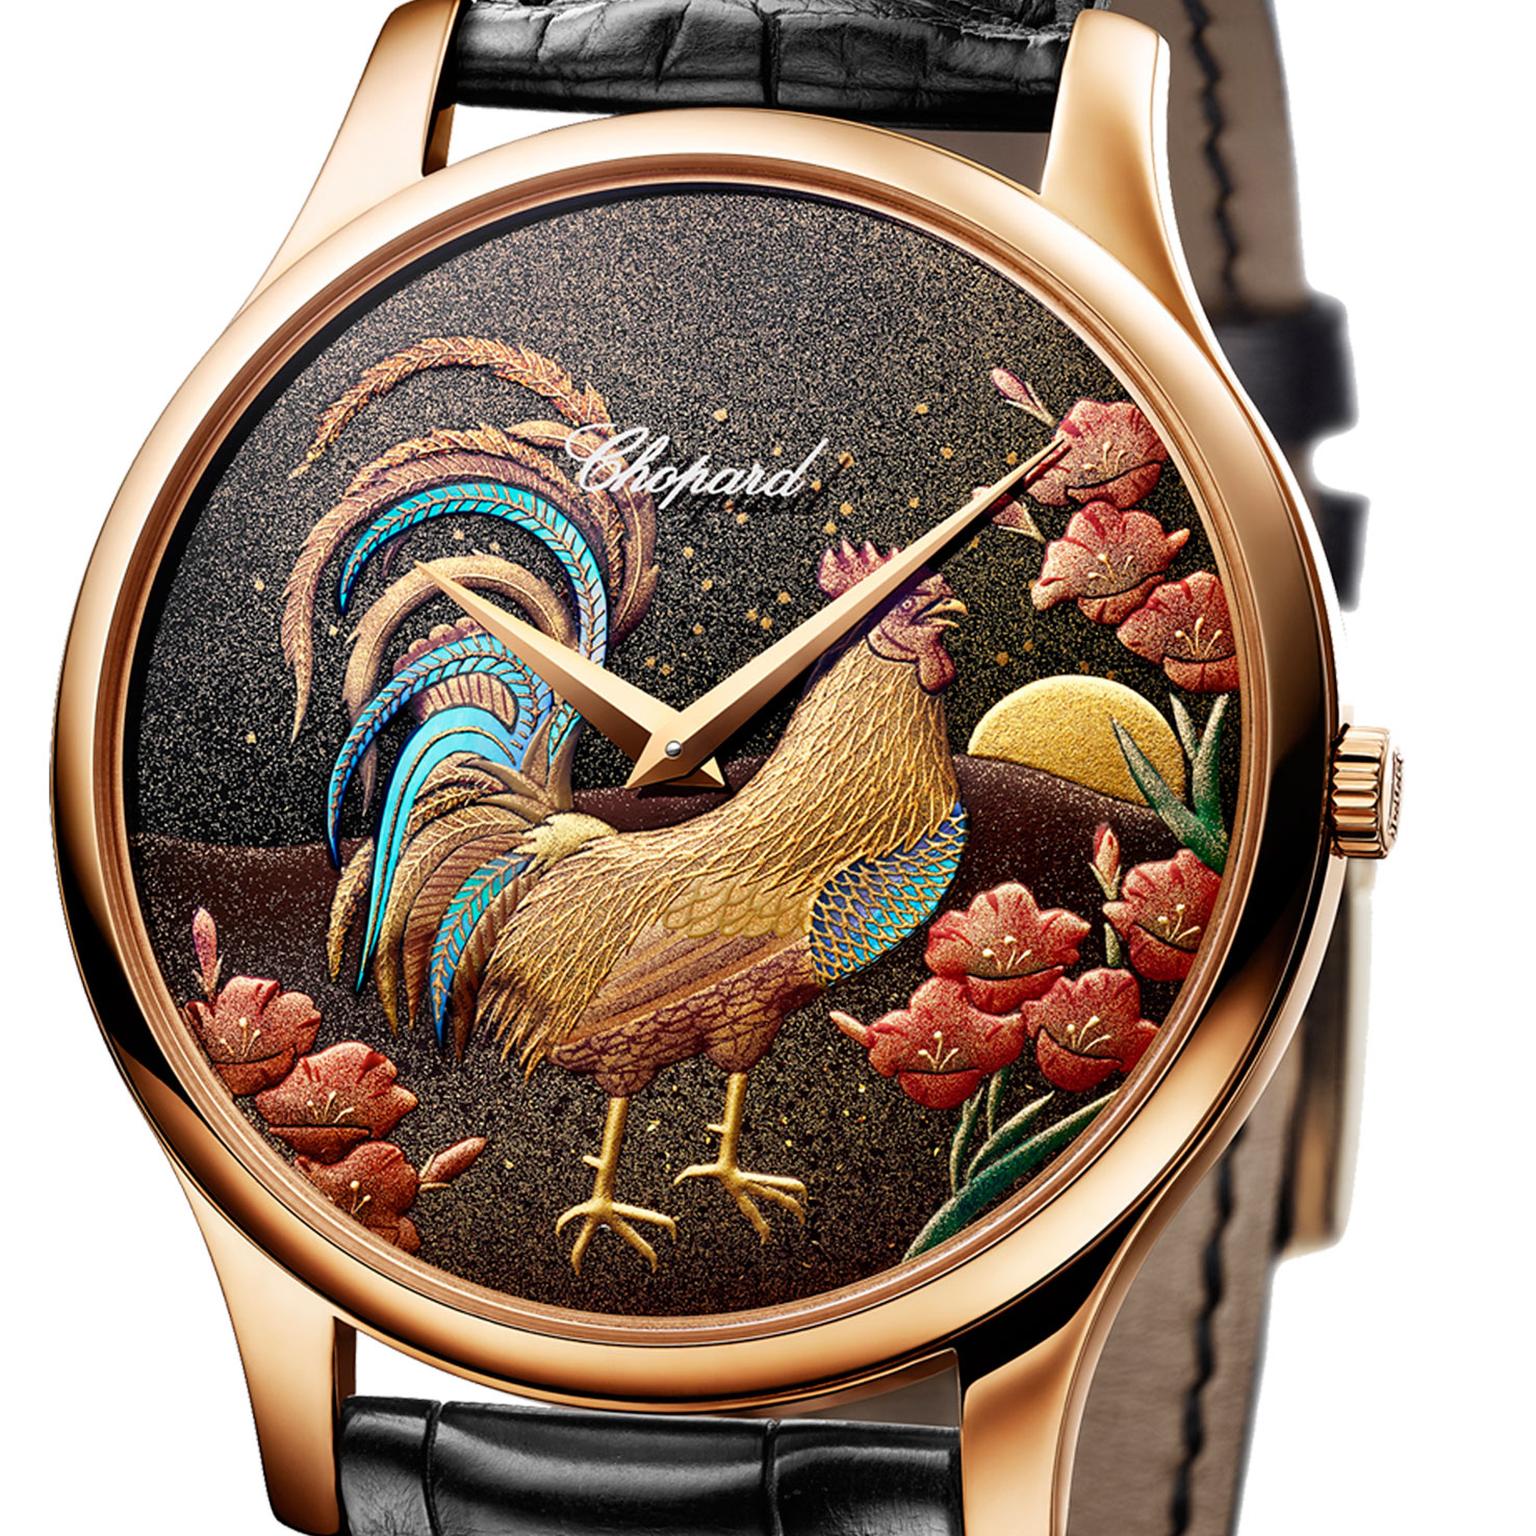 Chopard L.U.C XP Urushi Year of the Rooster watch